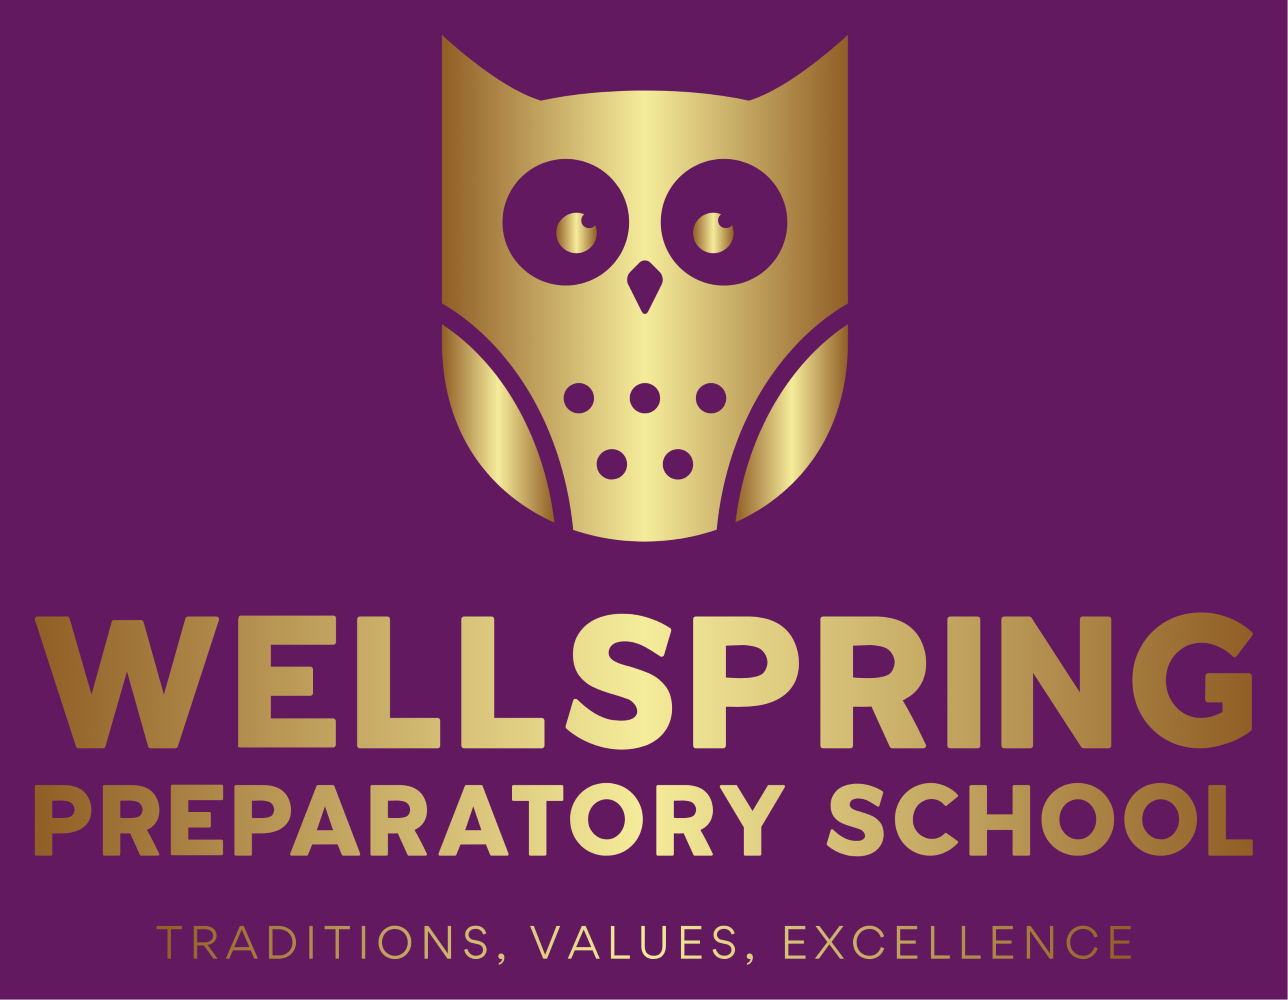 Wellspring Preparatory School